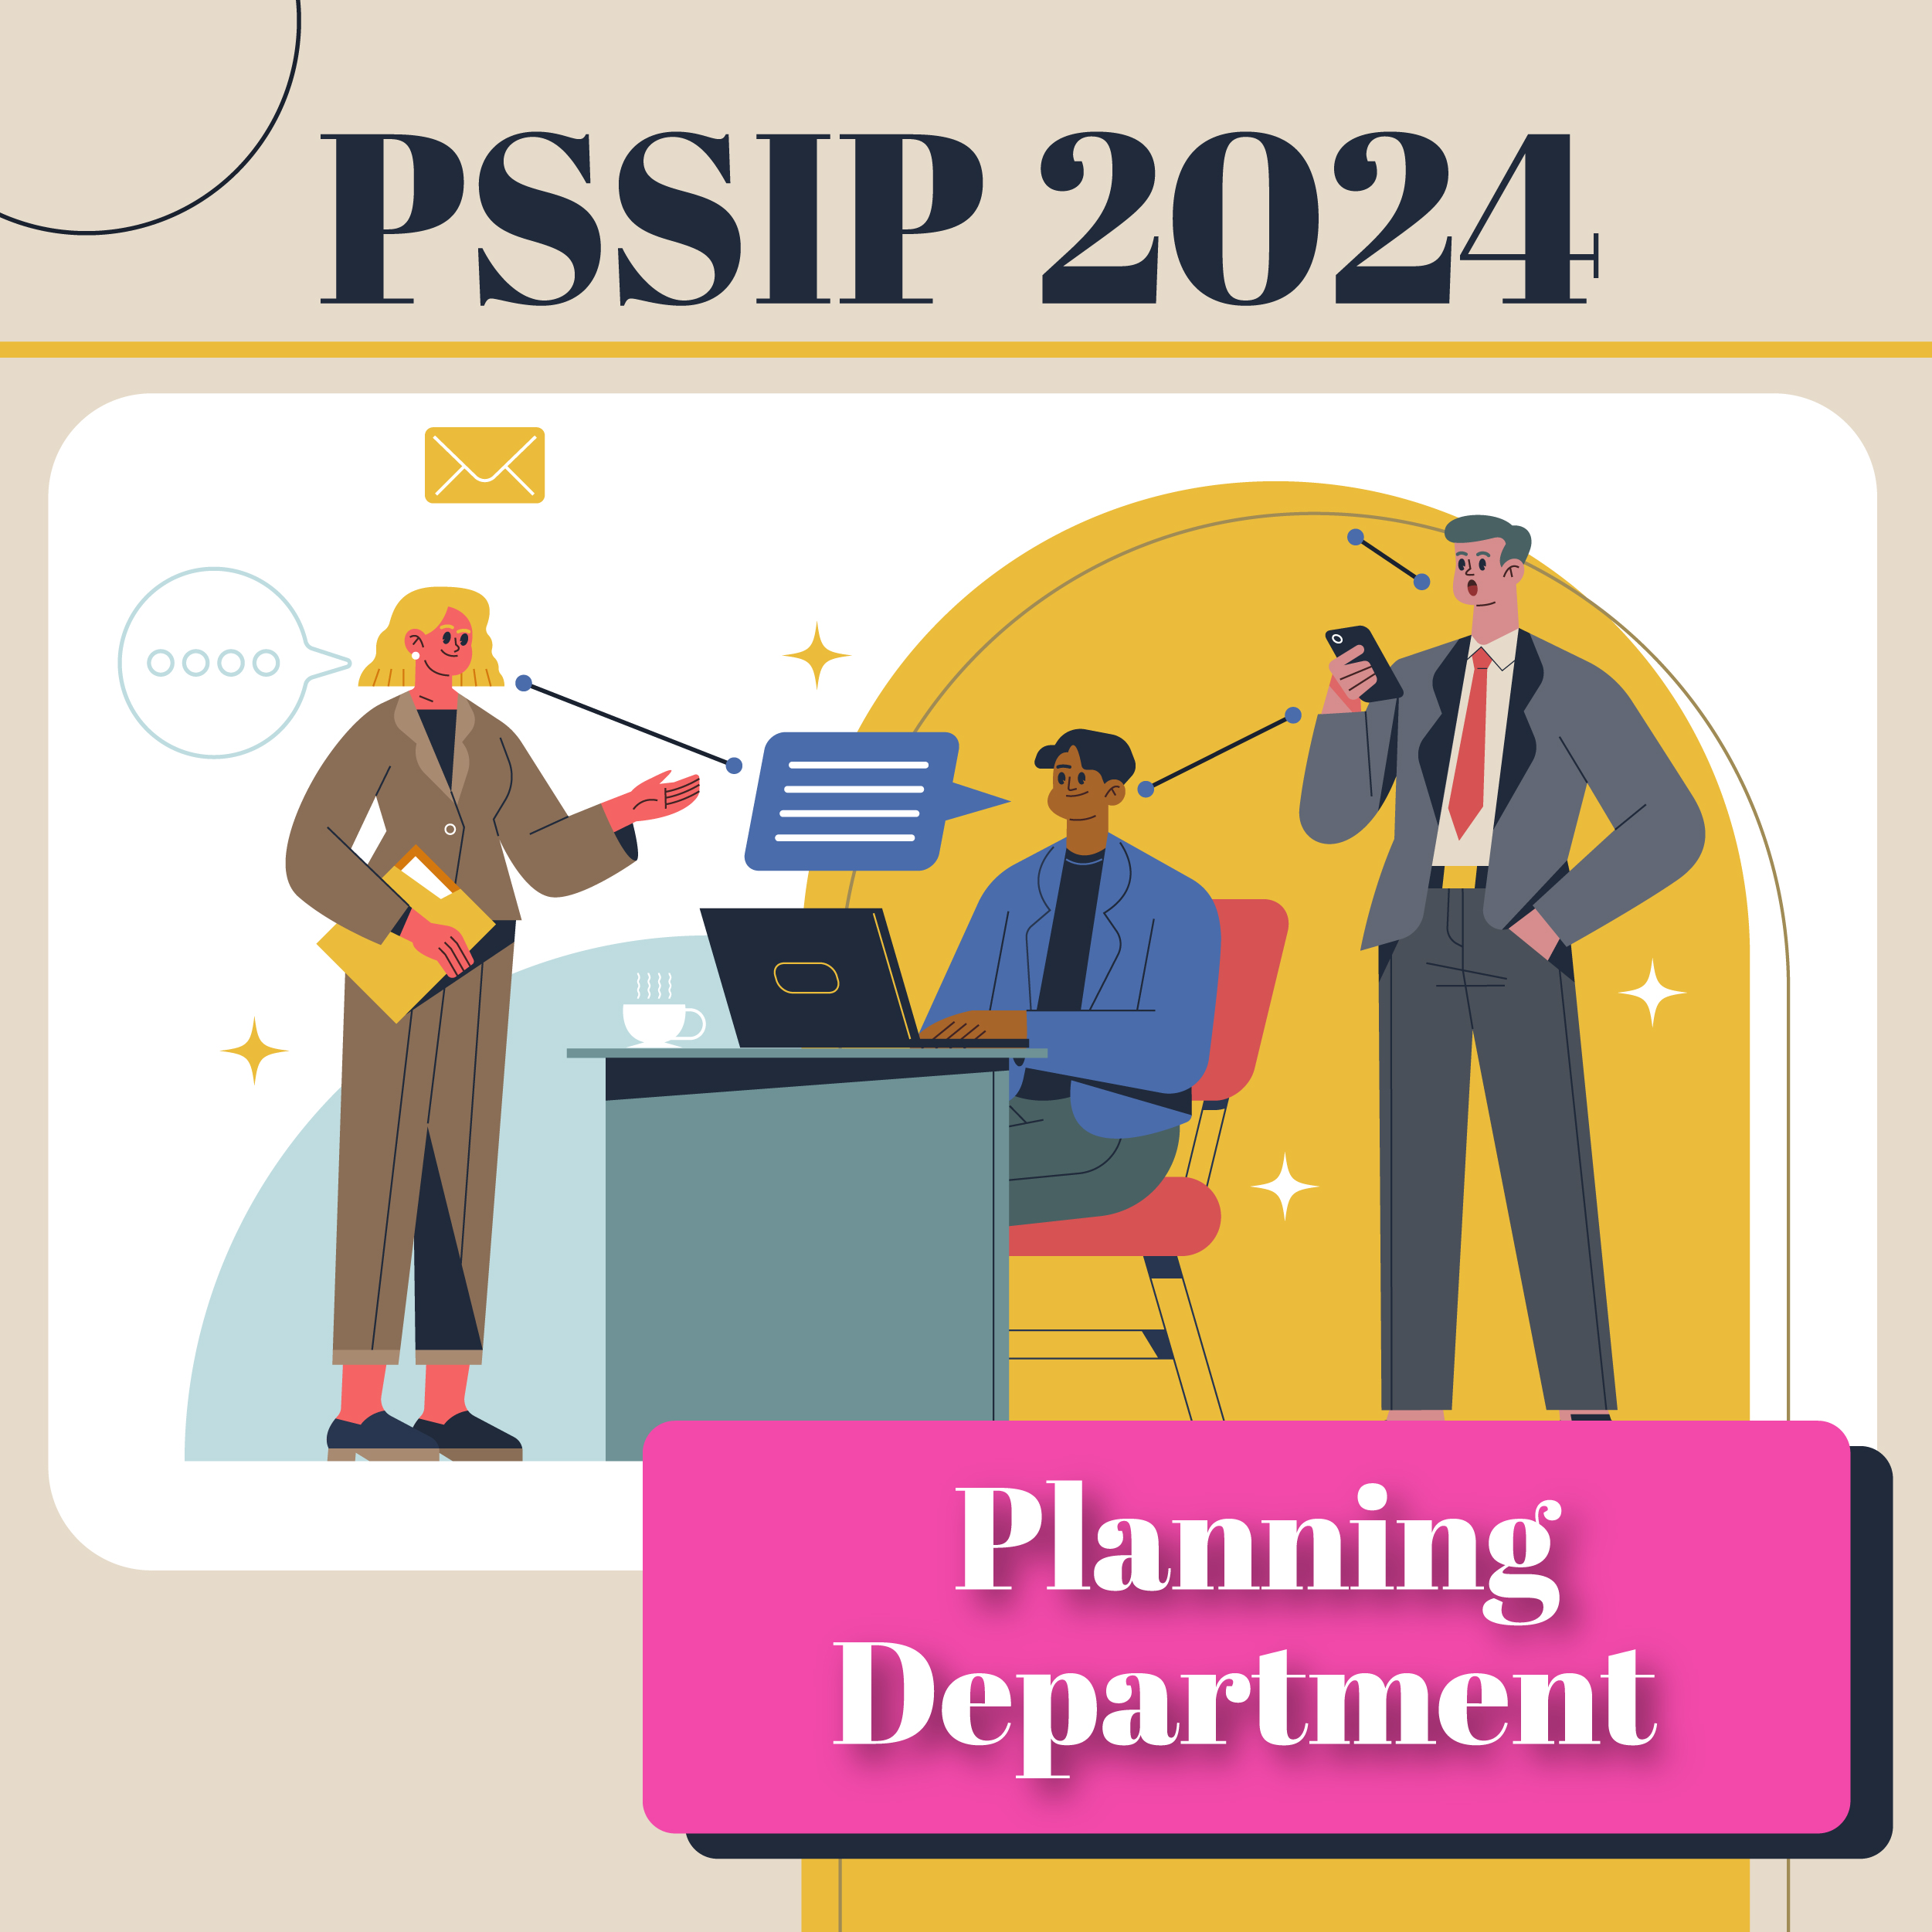 PSSIP2024 – Planning Department